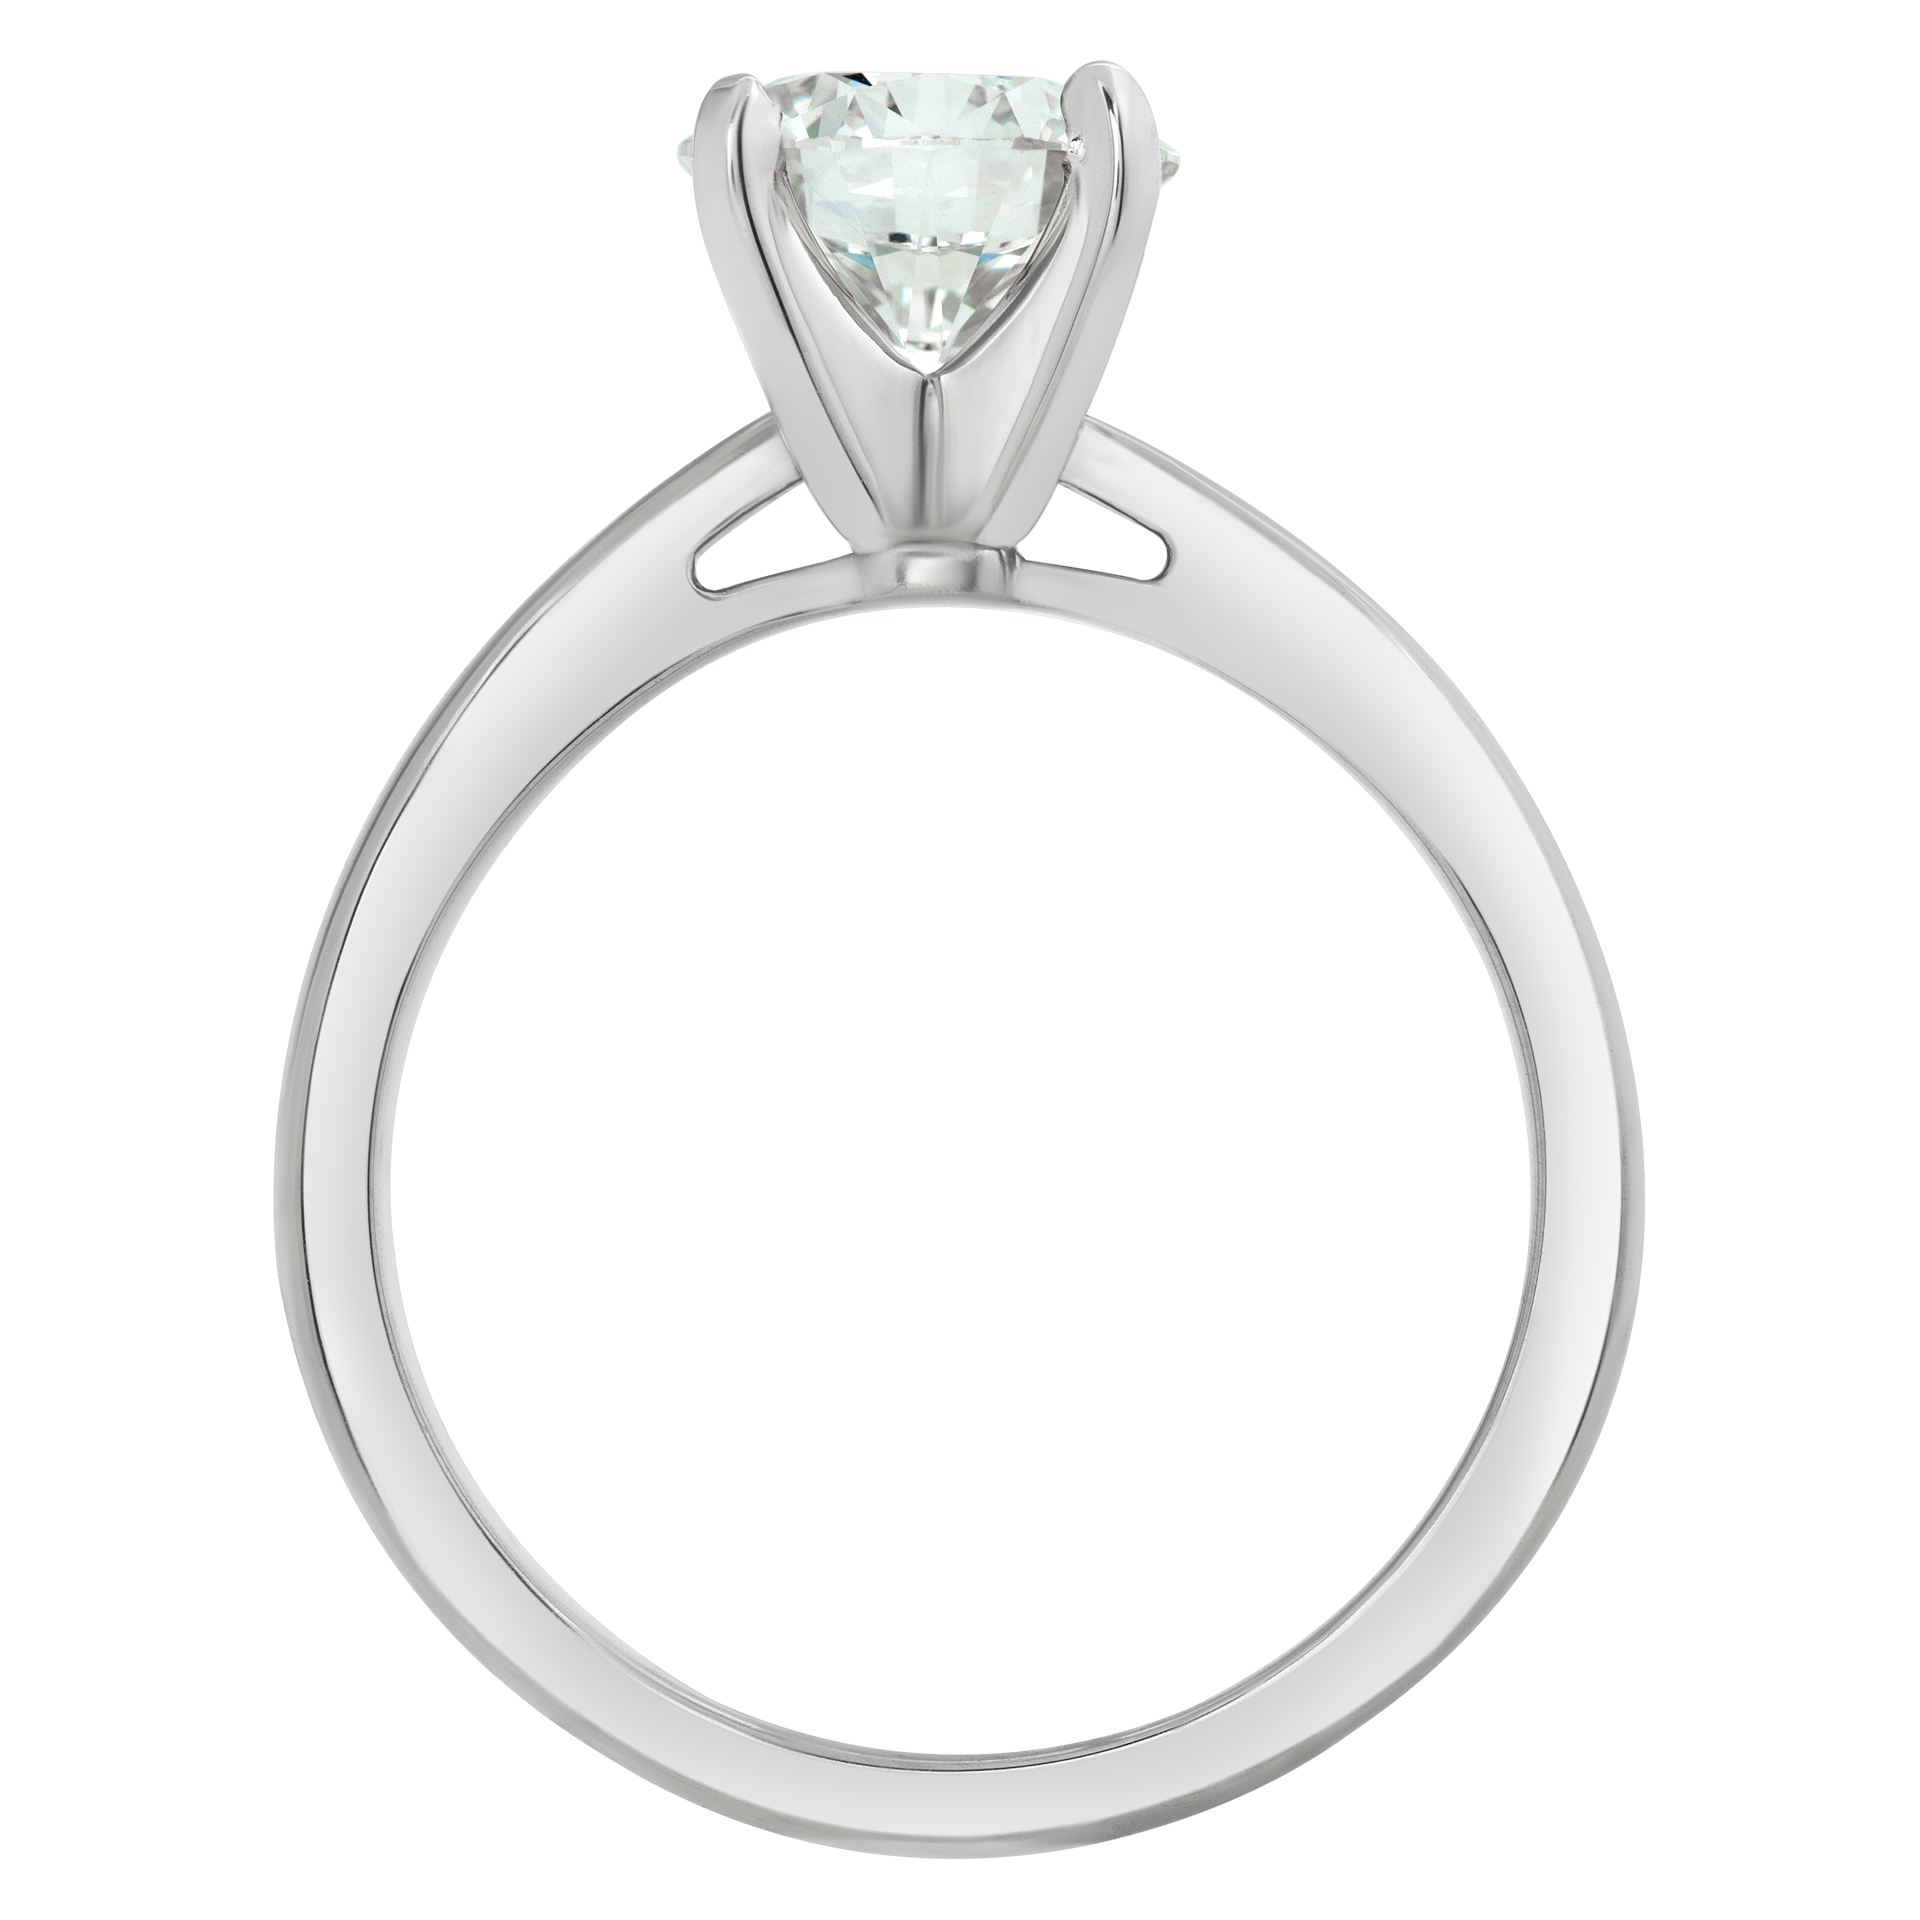 GIA certified round brilliant cut 1.78 carat diamond (I color, VS1 clarity) ring image 4